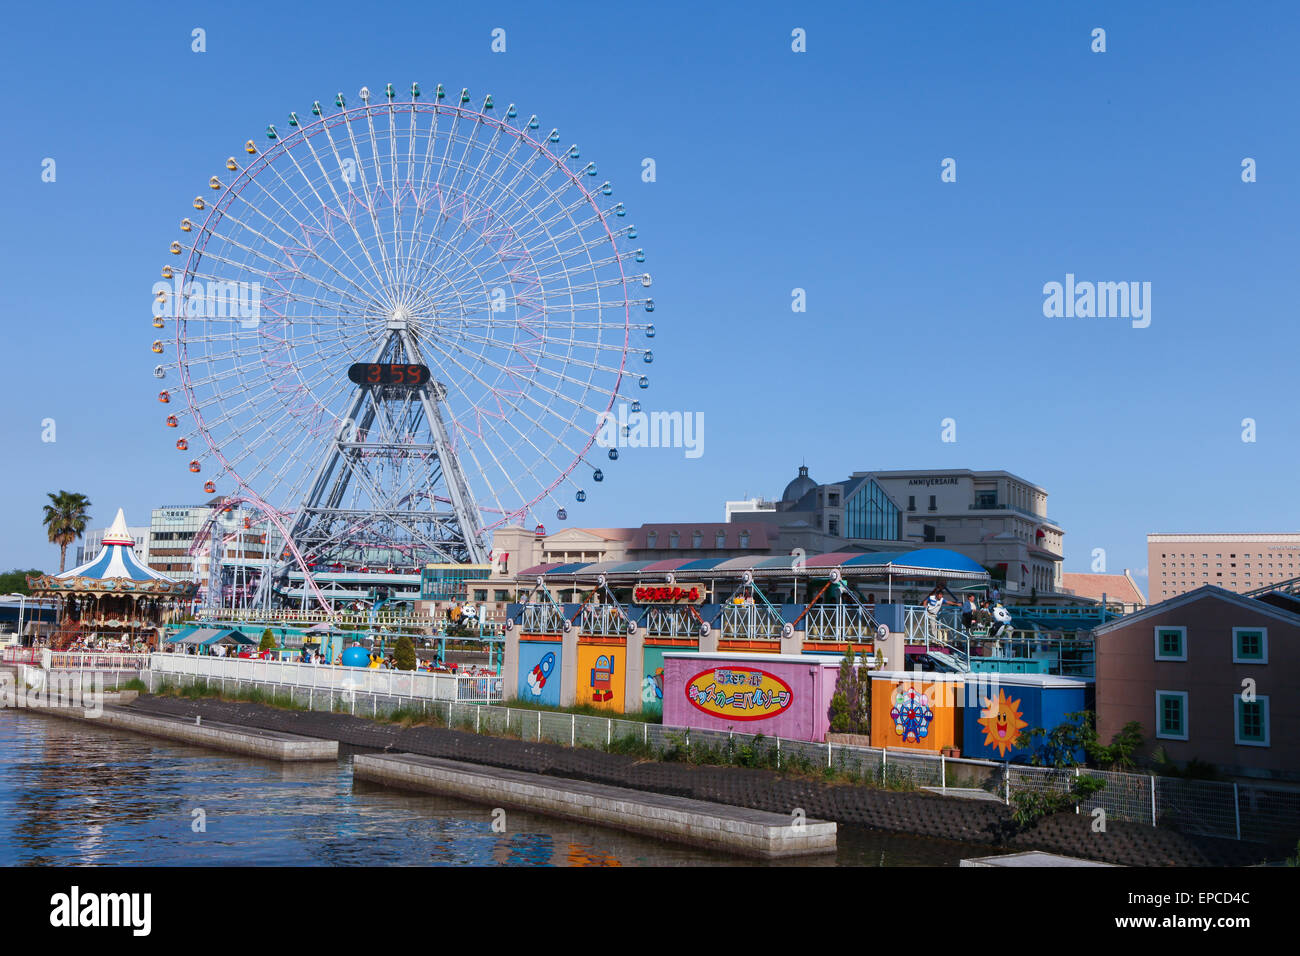 Big wheel at Yokohama's Cosmo world amusement park, located in the heart of Yokohama. Stock Photo